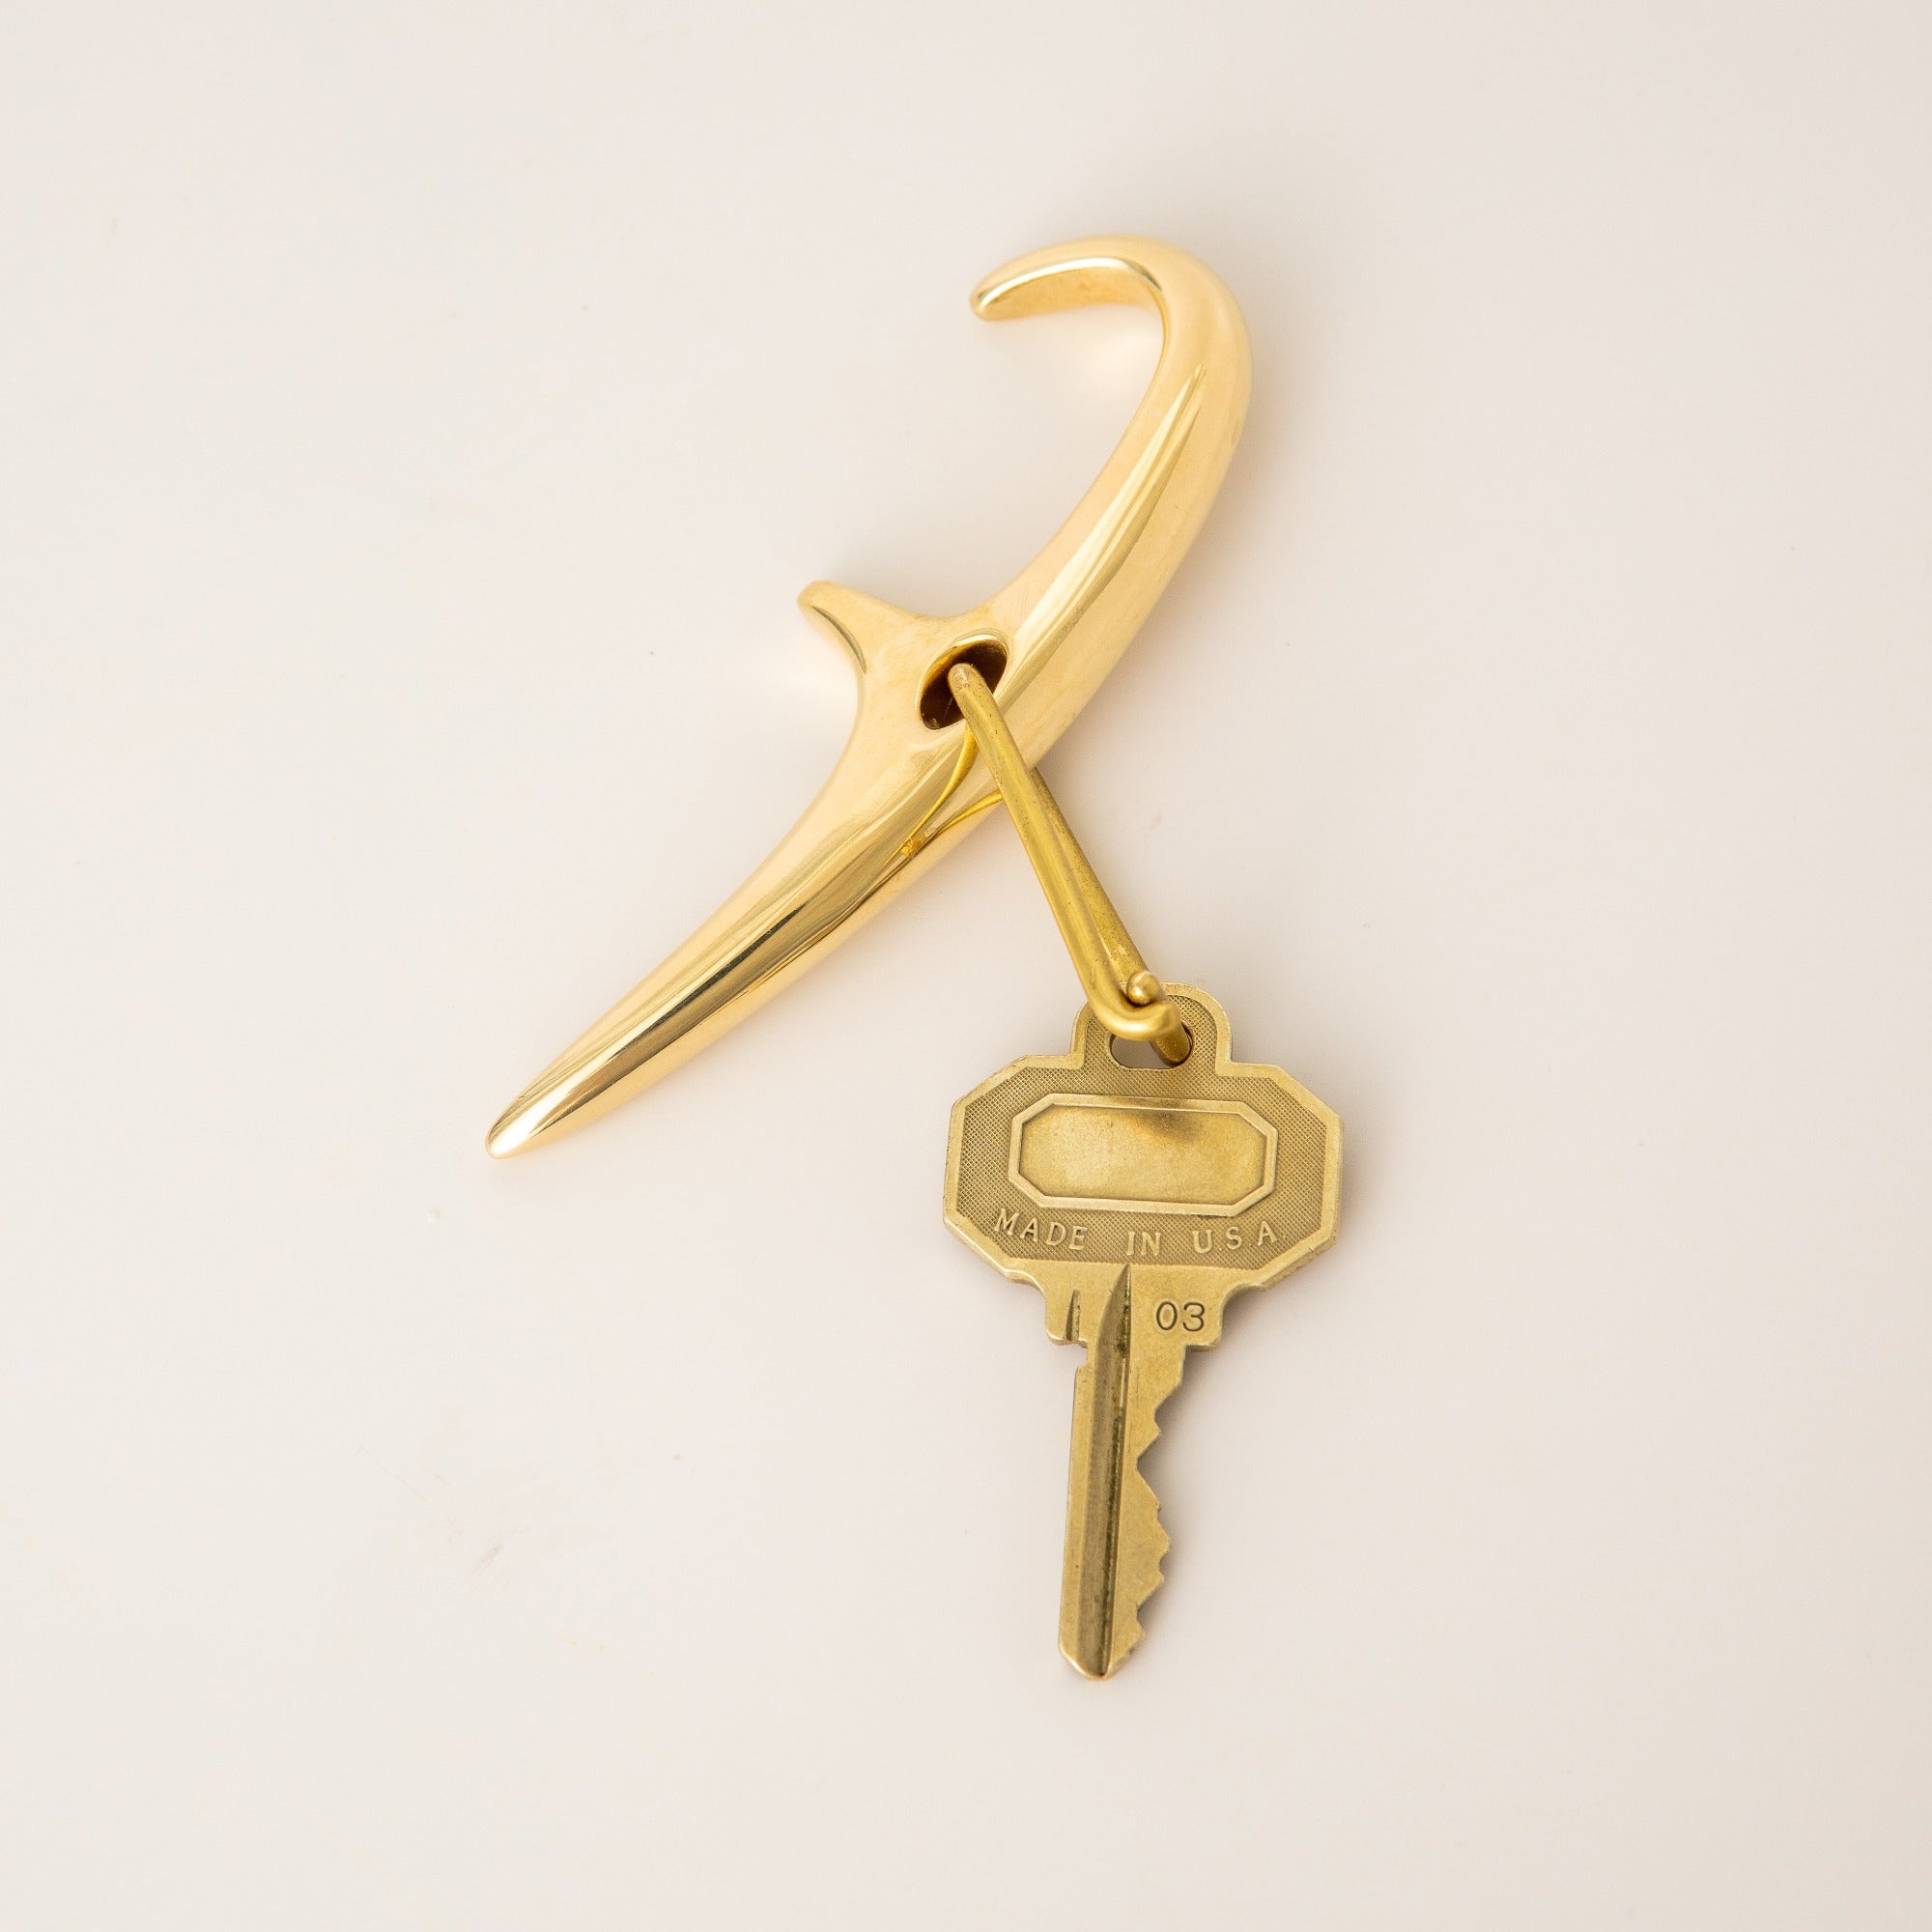 New Orleans Louisiana Advertising Keychain Key Chain Keys